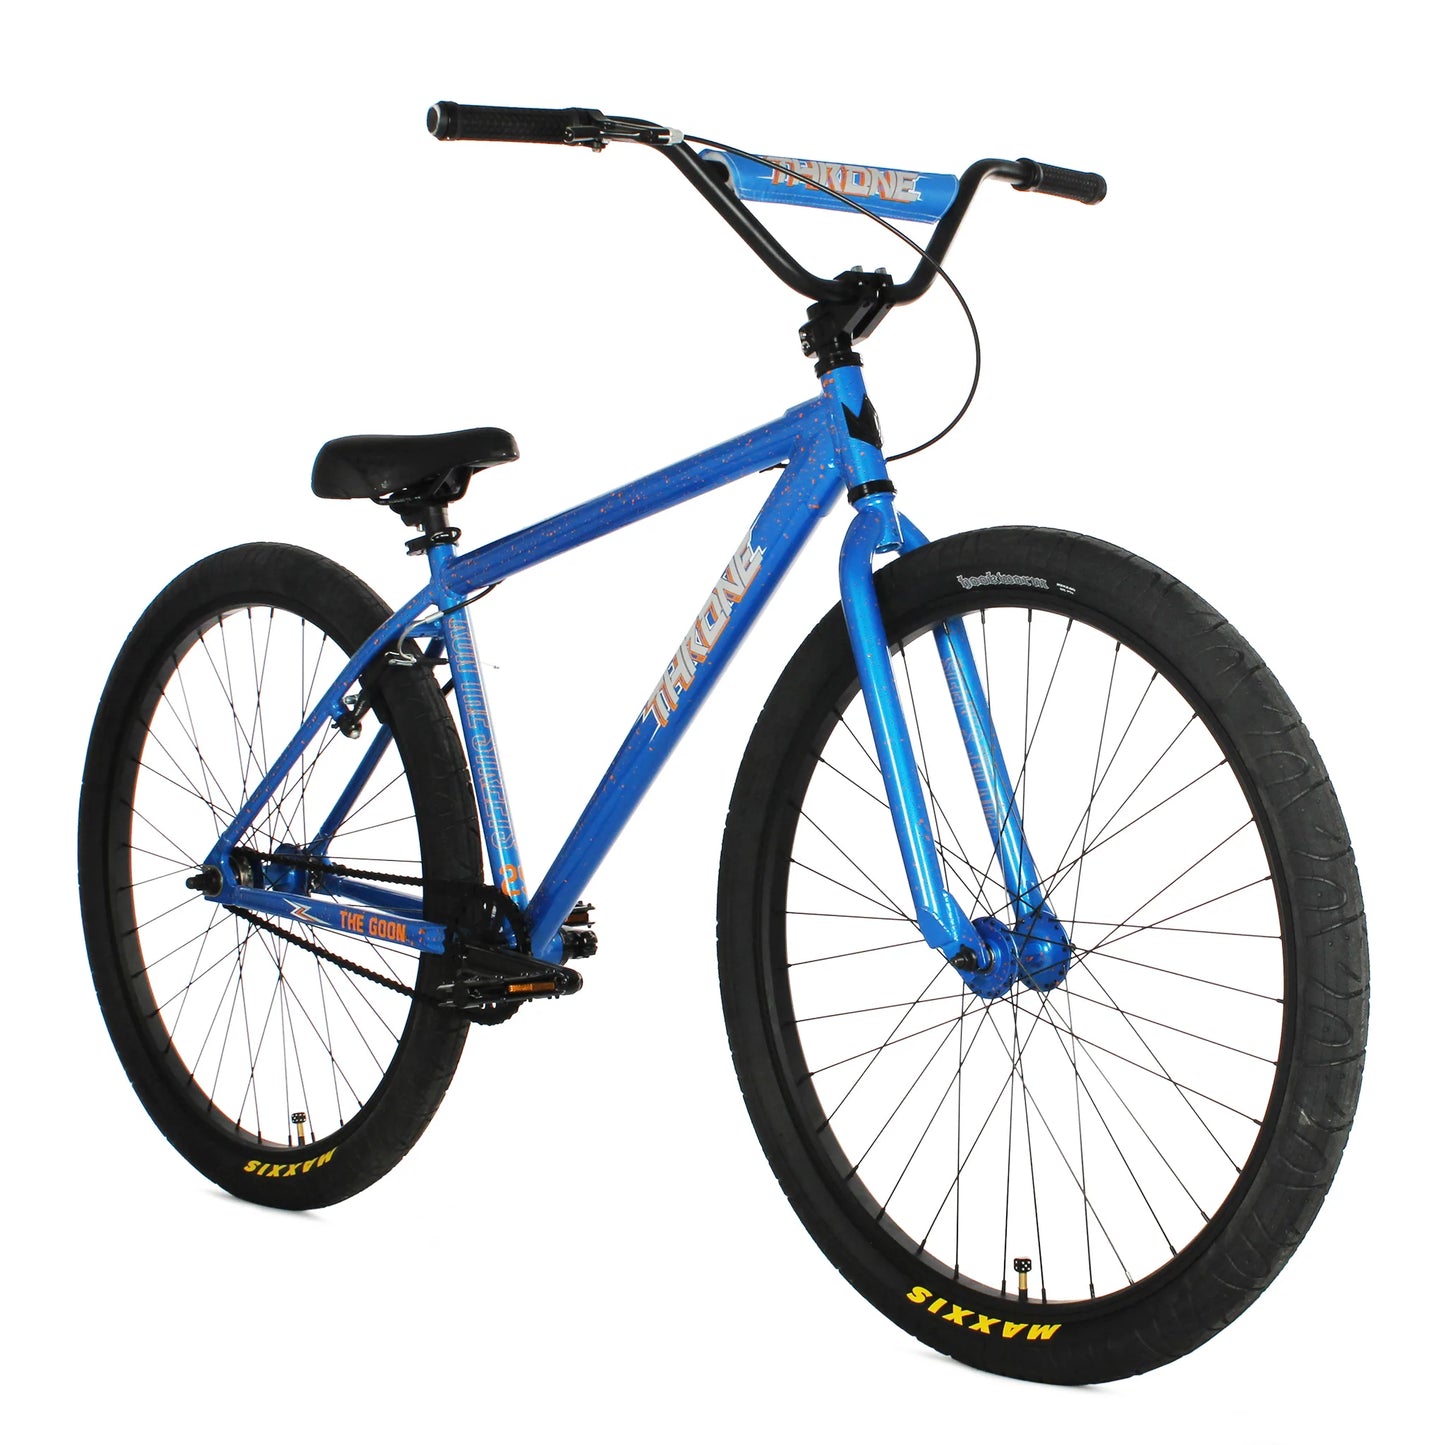 Throne Cycles The Goon - Blue Crush | Fixed Gear Urban BMX Bike | Urban Bike | The Goon Cycle | Throne Cycle | Street Cycle | Throne BMX | BMX Bike | Bike Lover USA